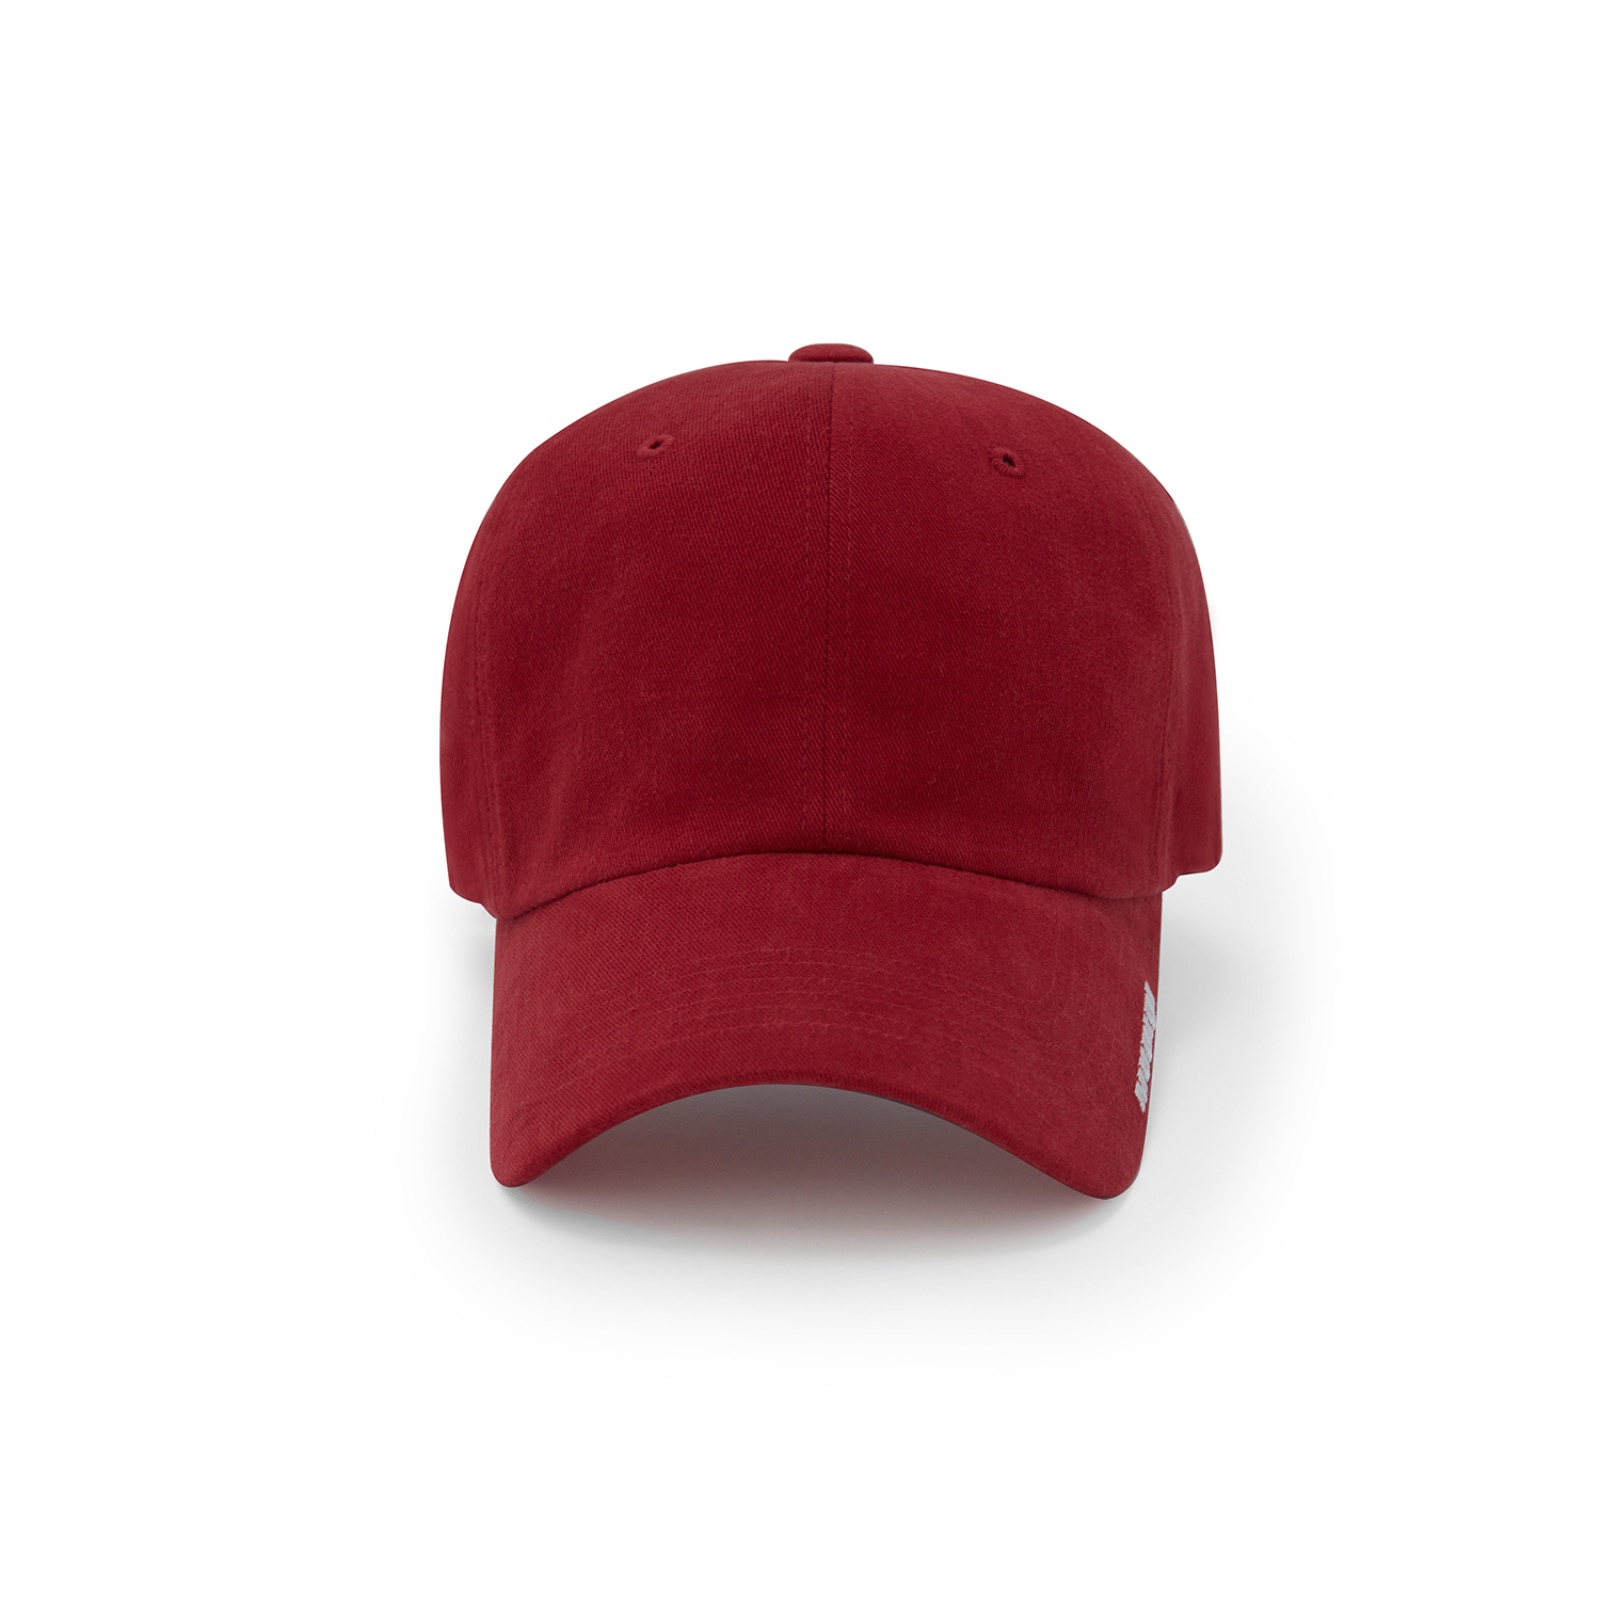 Mudidi basic ball cap 001 Red